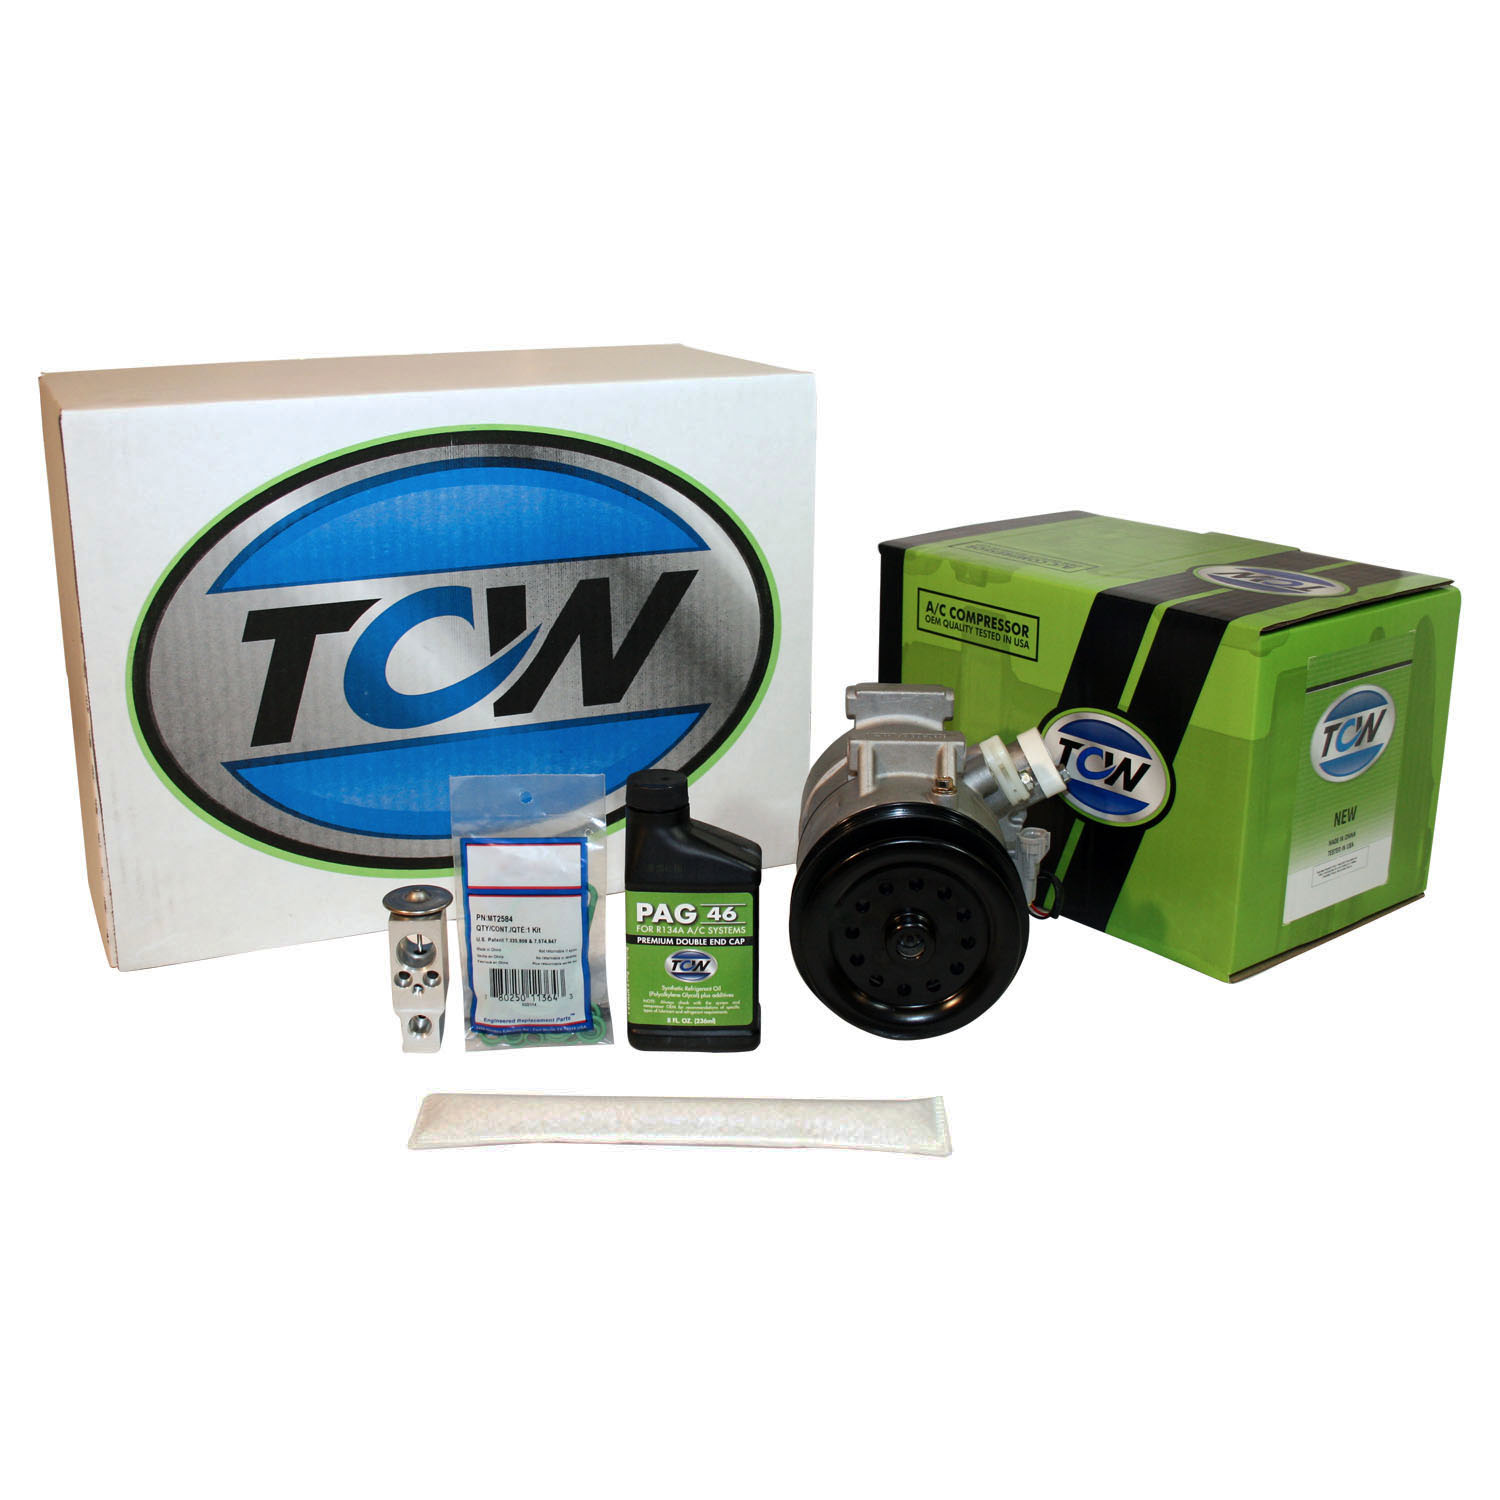 TCW Vehicle A/C Kit K1000409N New Product Image field_60b6a13a6e67c